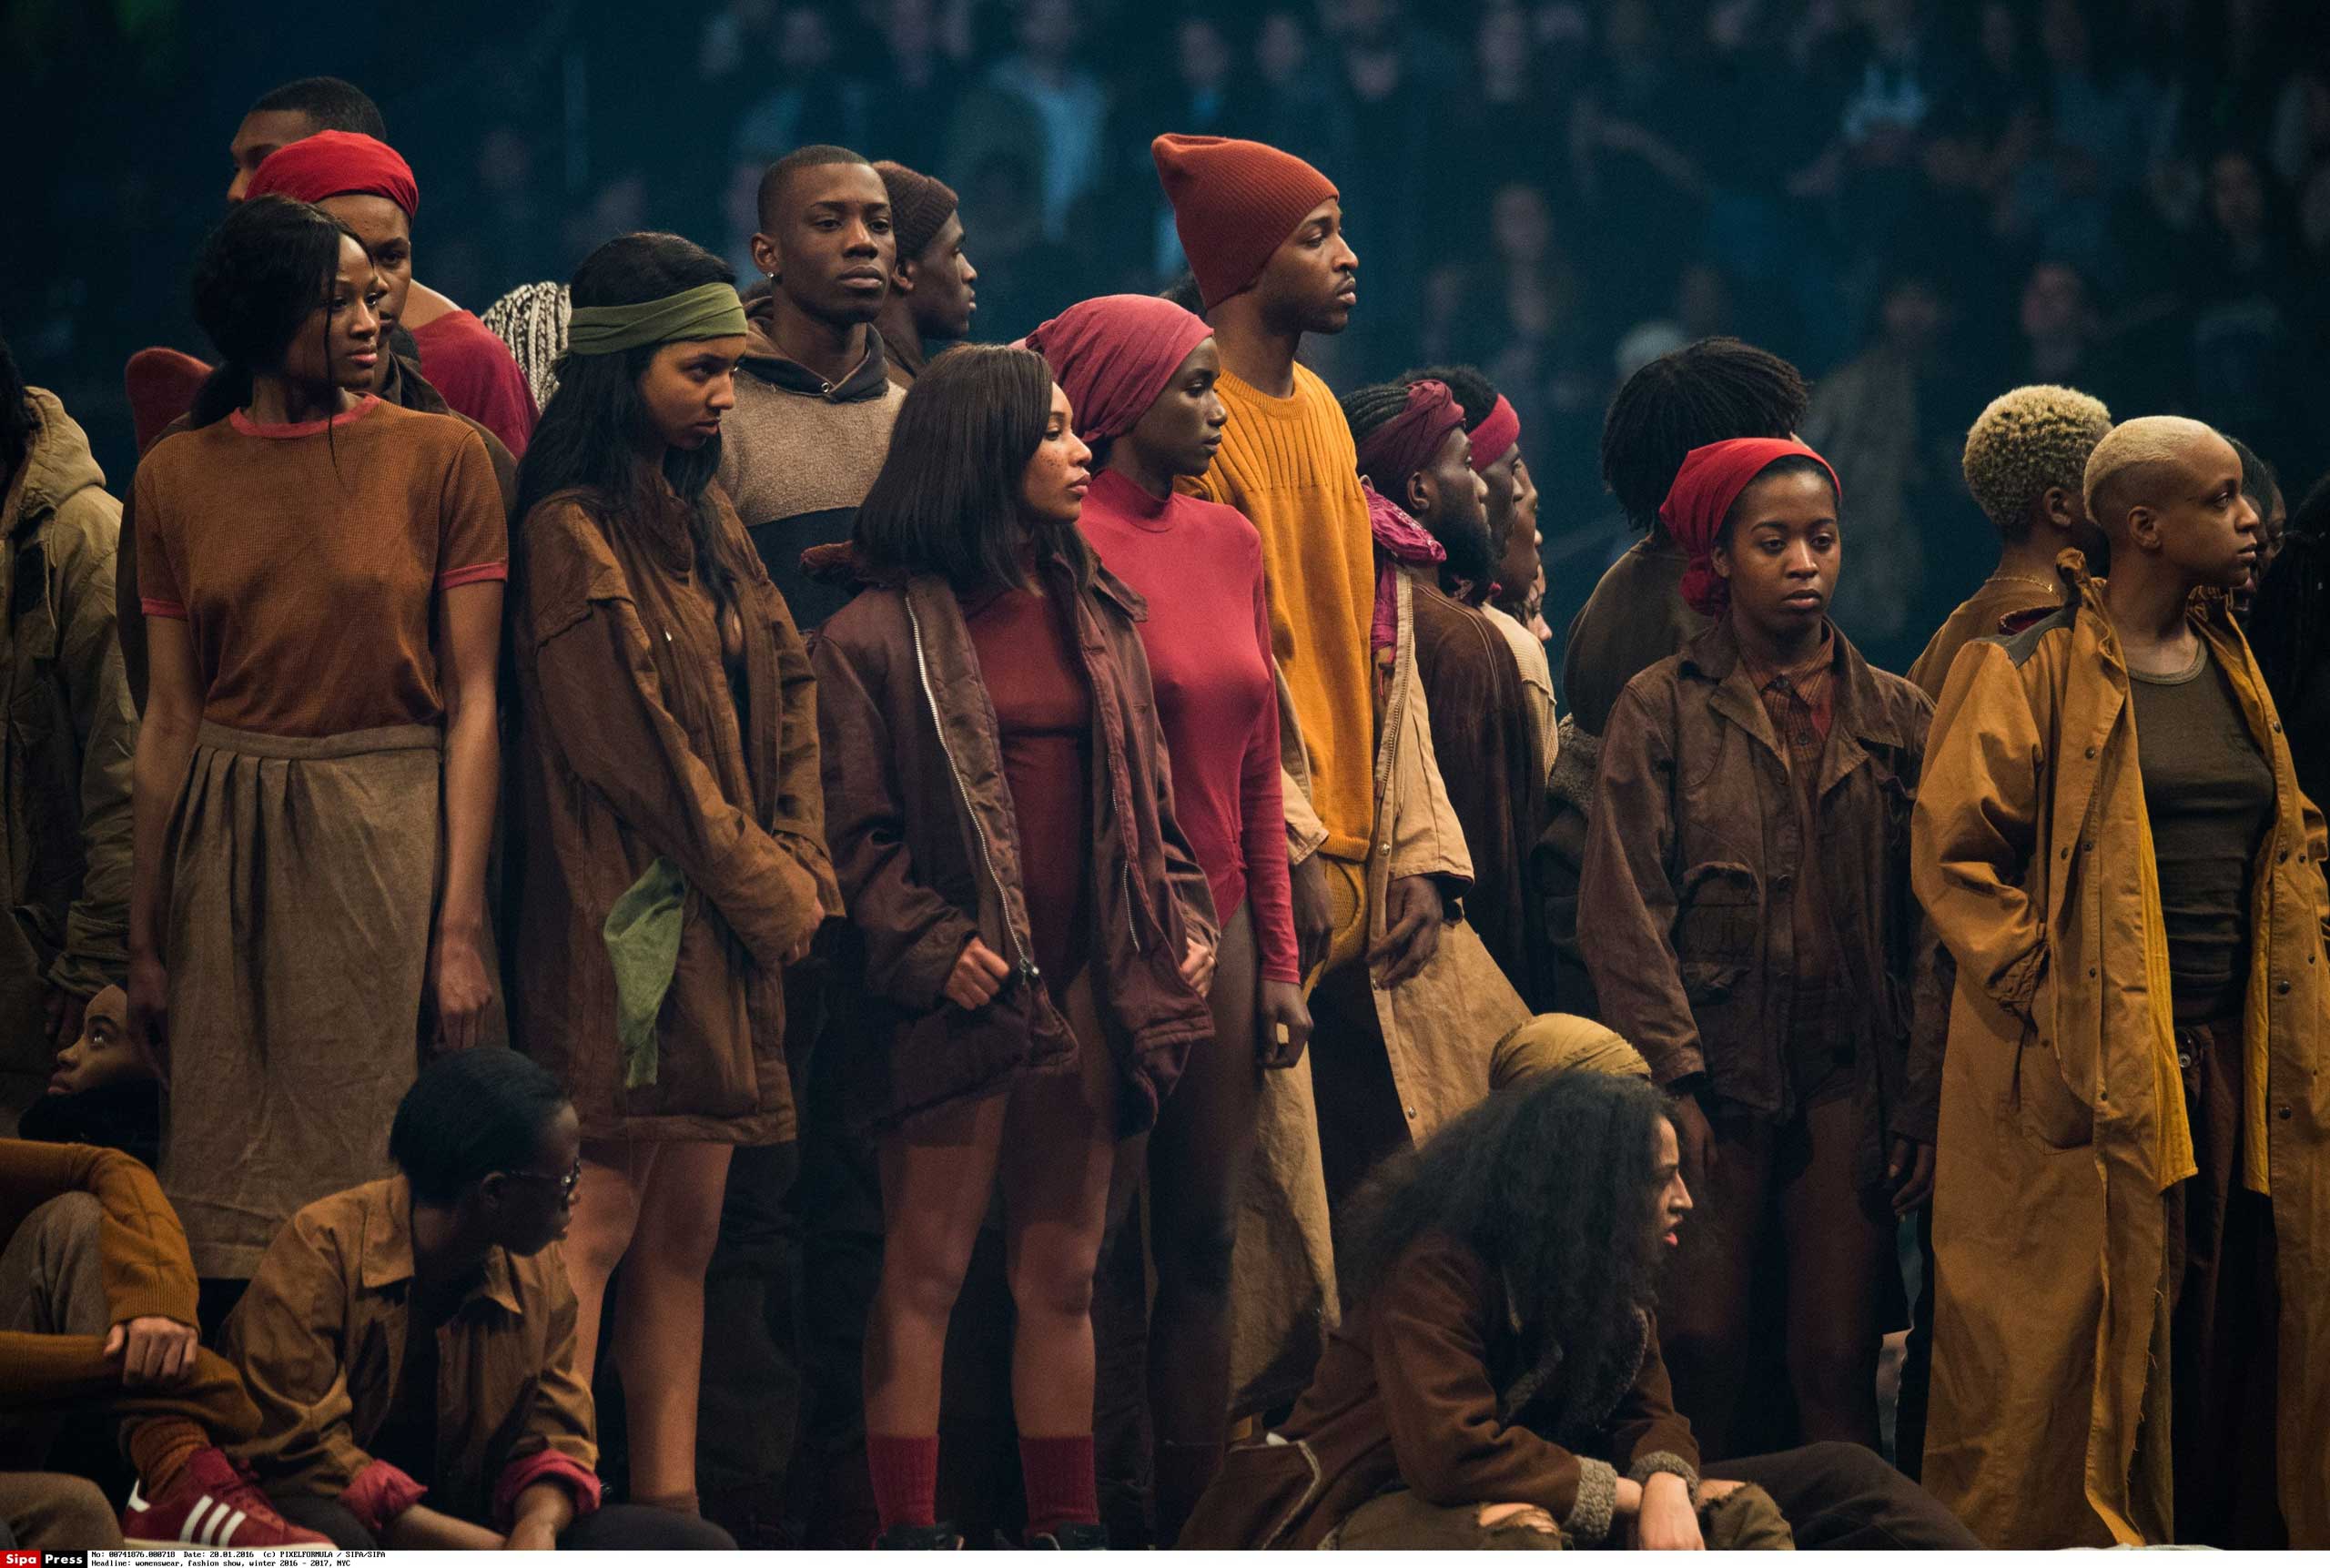 Kanye West's Yeezy Season 3 fashion show at Madison Square Garden, Feb. 11, 2016.